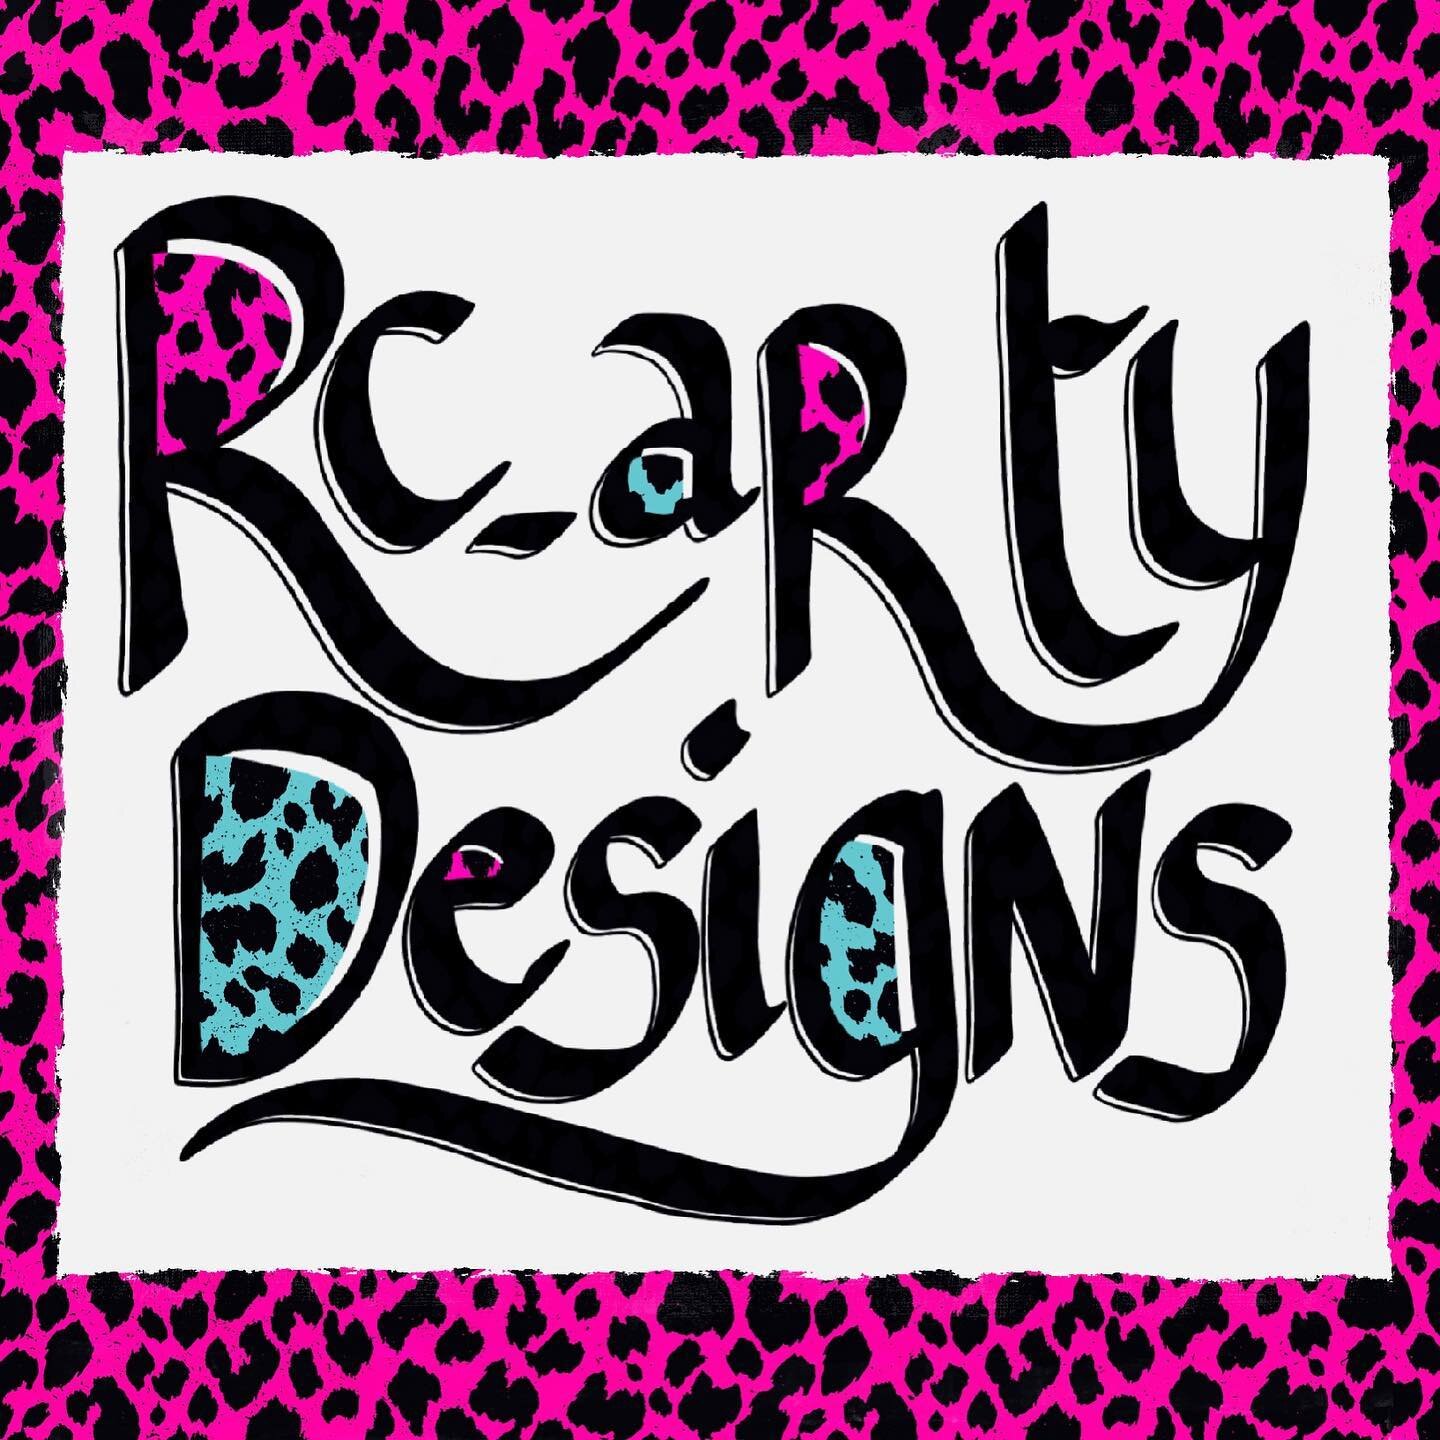 Some new branding happening here&hellip;watch this space!
#branding #brandingdesign #marketingdigital #newlogo #logo #rcarty #rcartydesigns